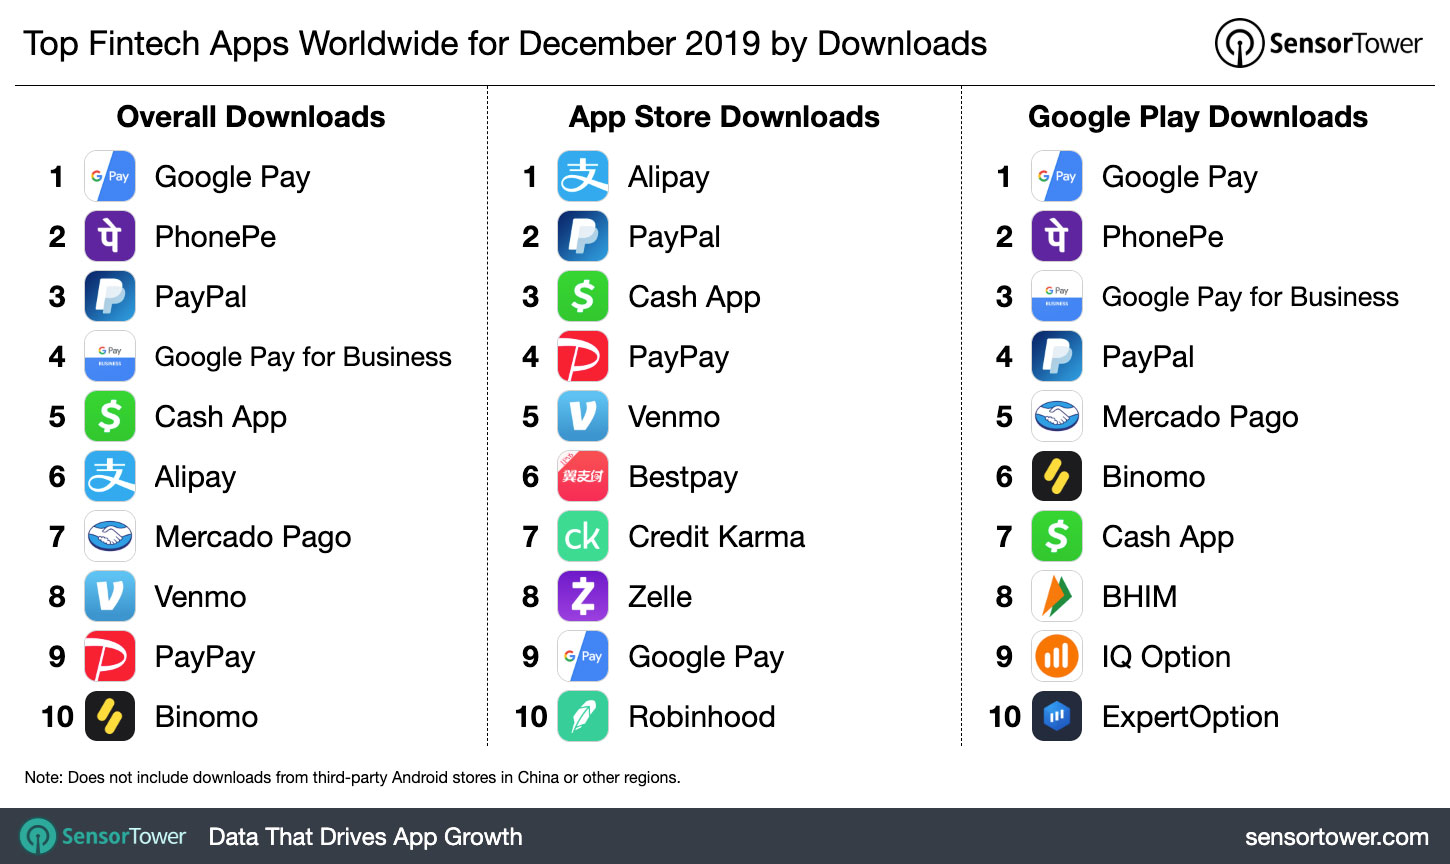 Top Fintech Apps Worldwide for December 2019 by Downloads